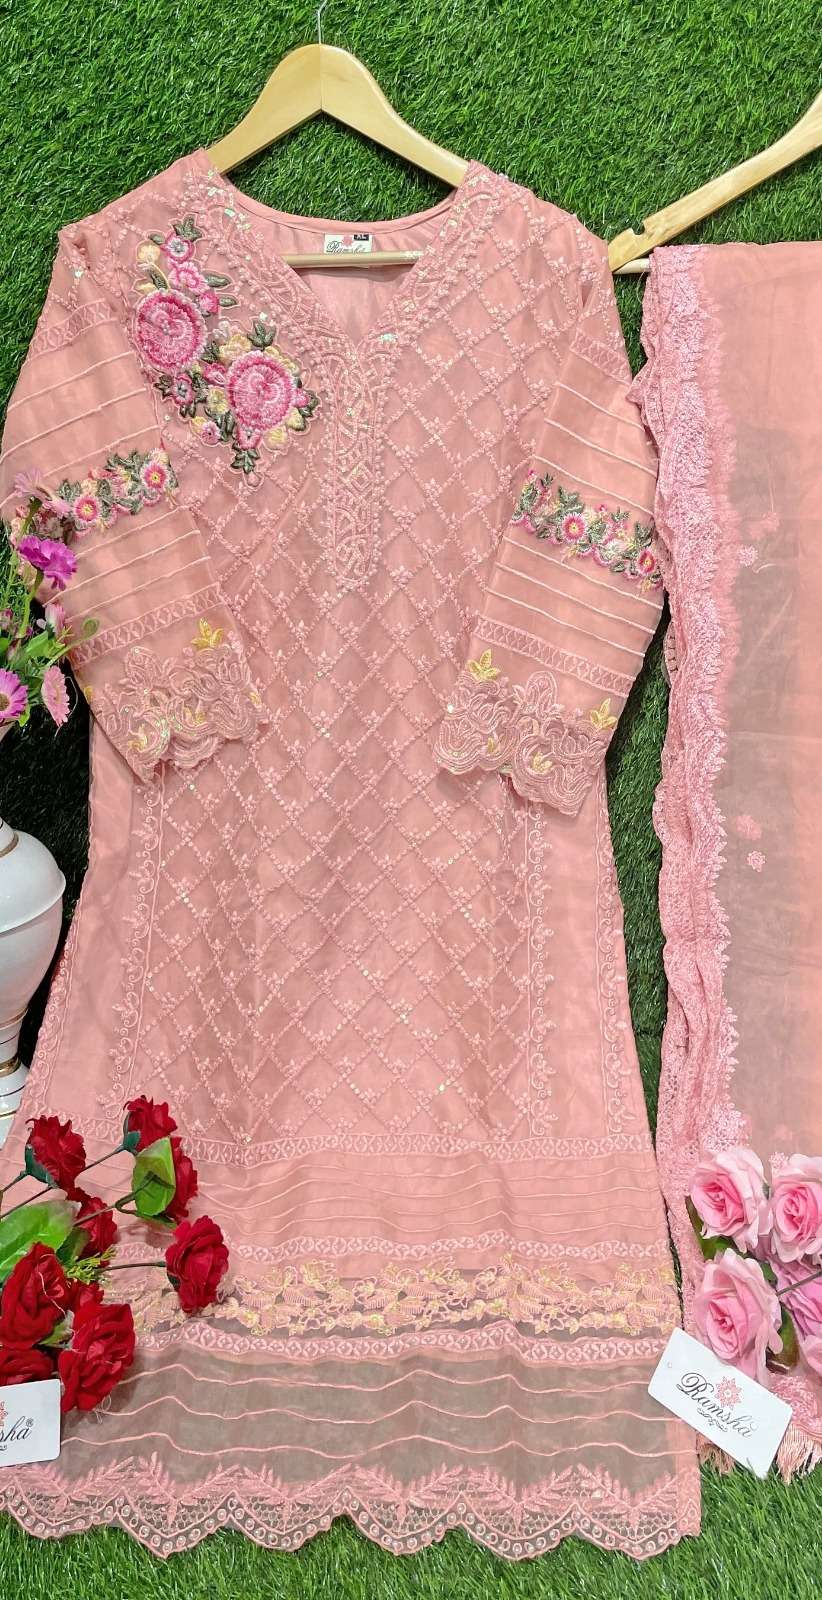 ramsha 1070 series classy look designer pakistani salwar suits wholesaler surat